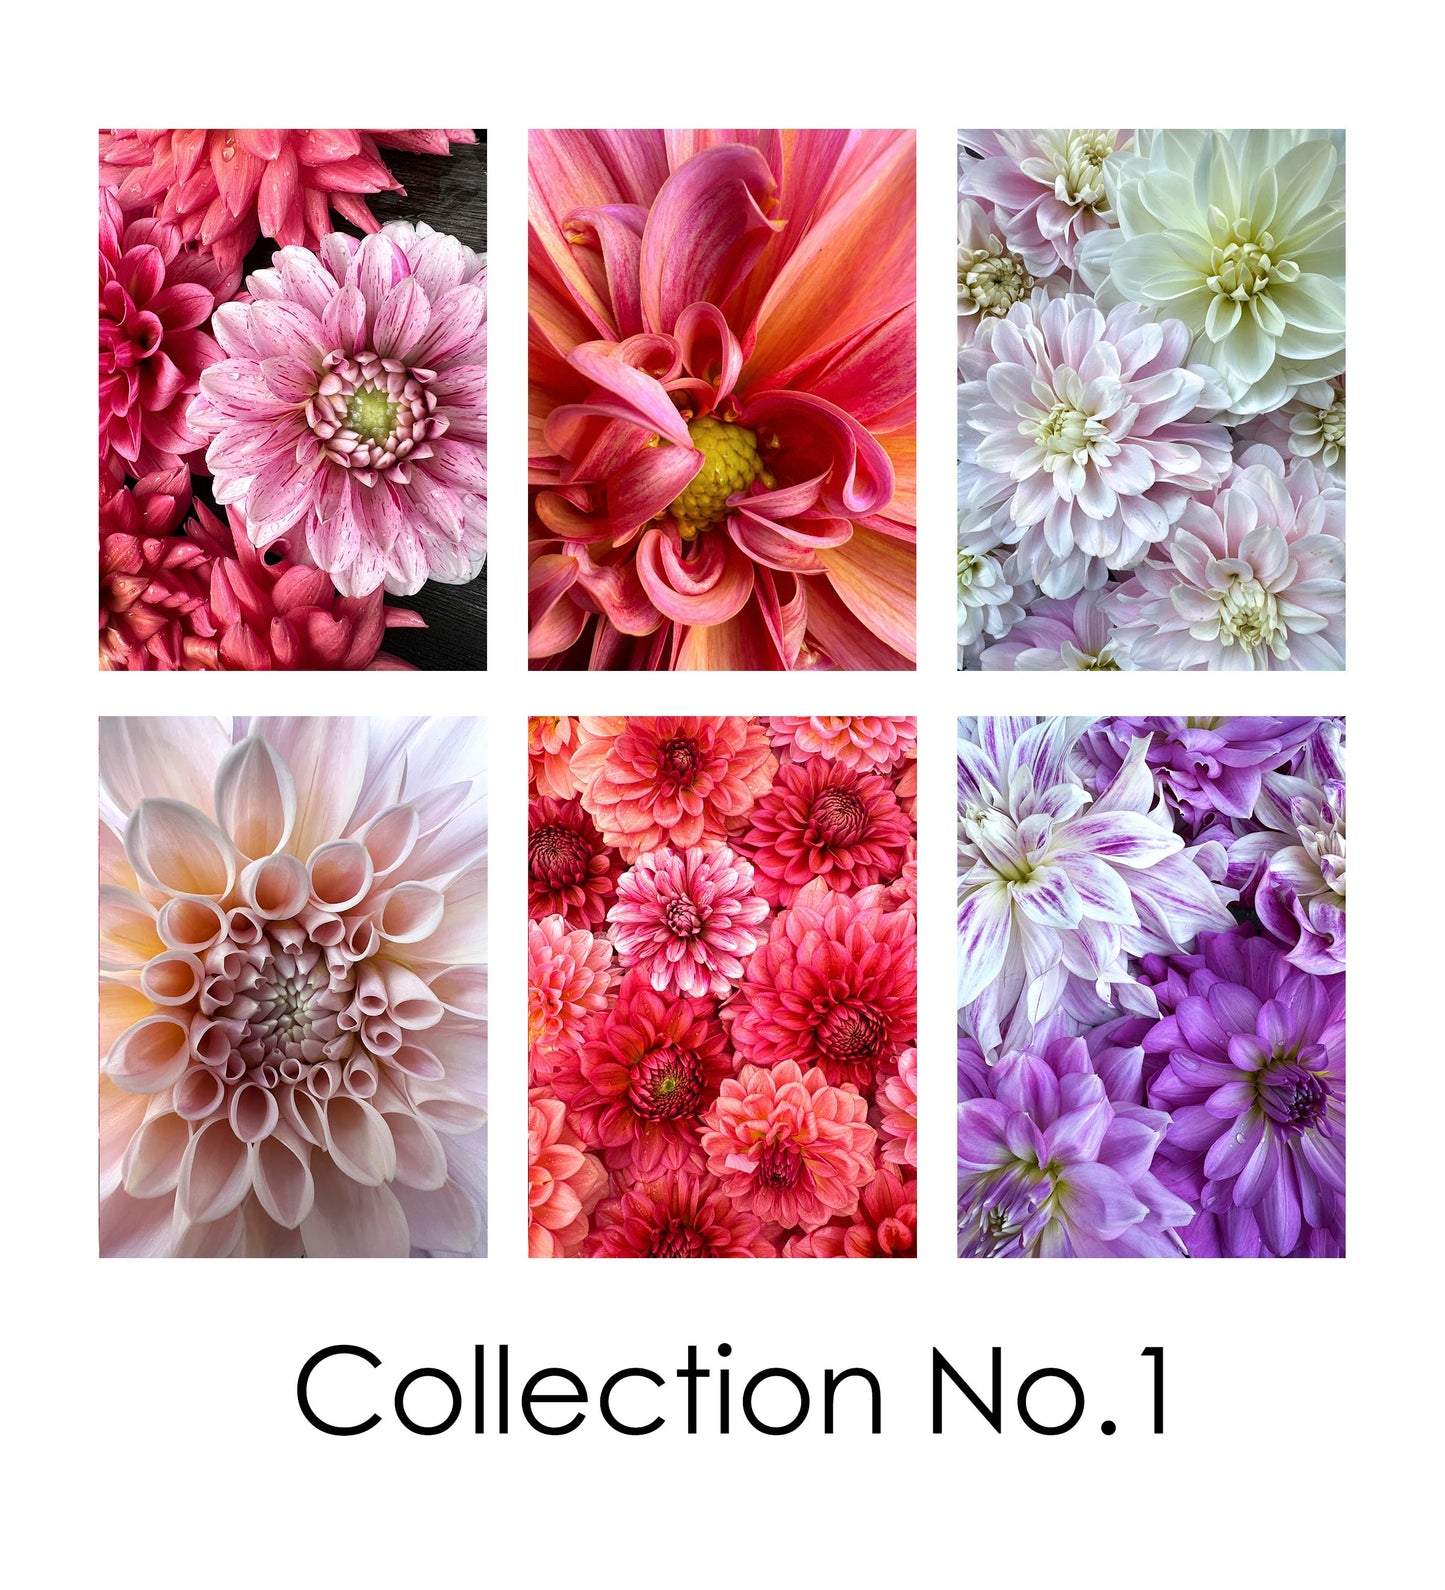 Collection No. 1